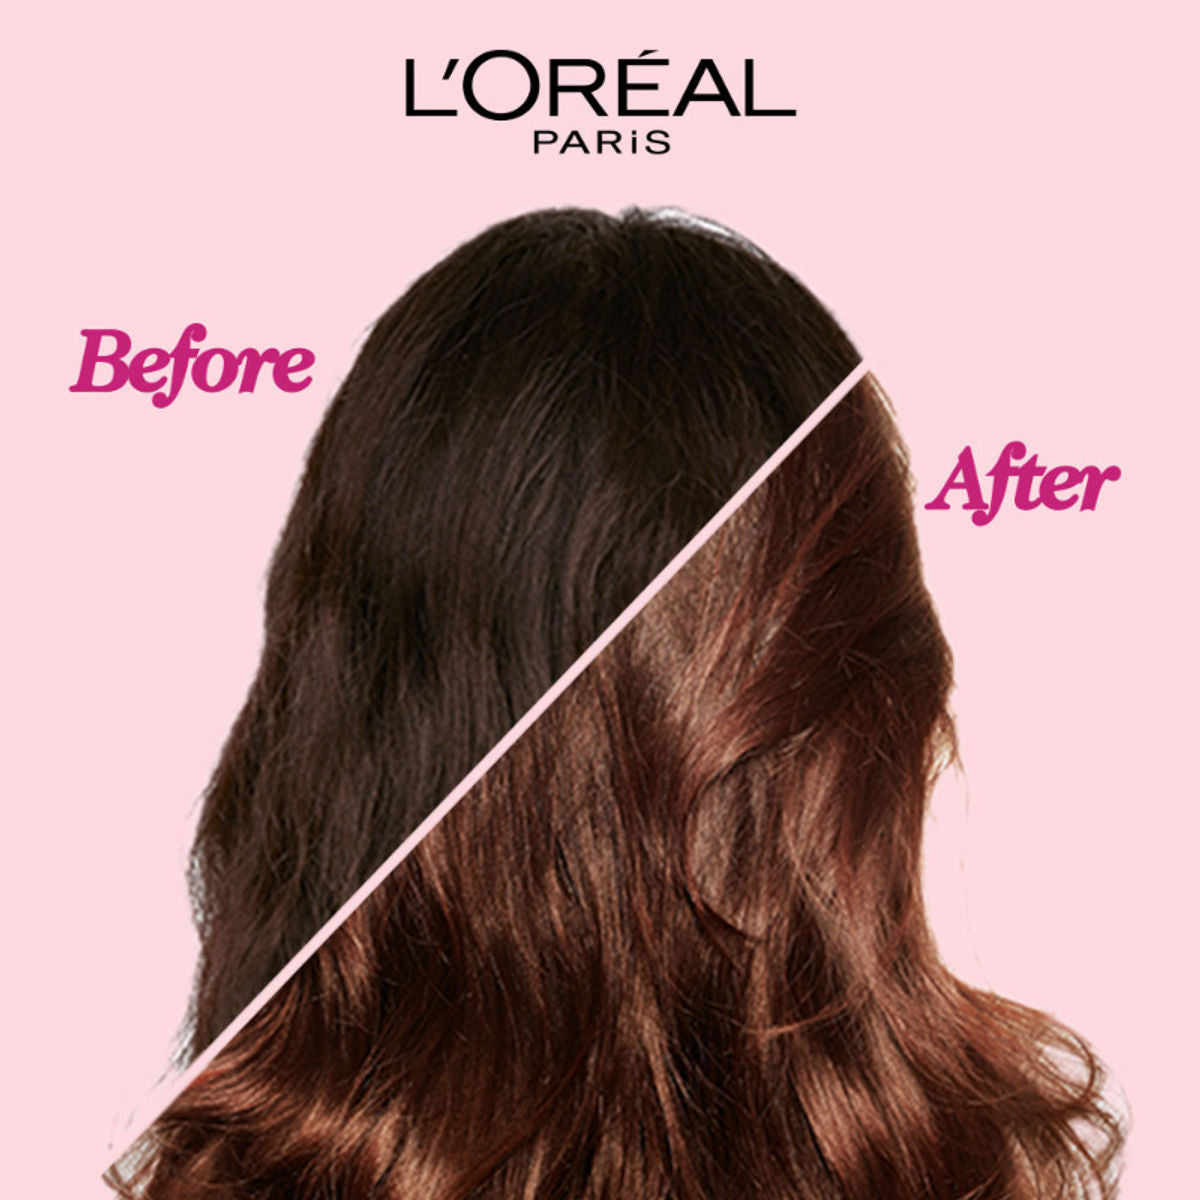 L'Oreal Paris Casting Creme Gloss Hair Color - Chocolate 535 (87.5 g + 72 ml) L'Oreal Paris